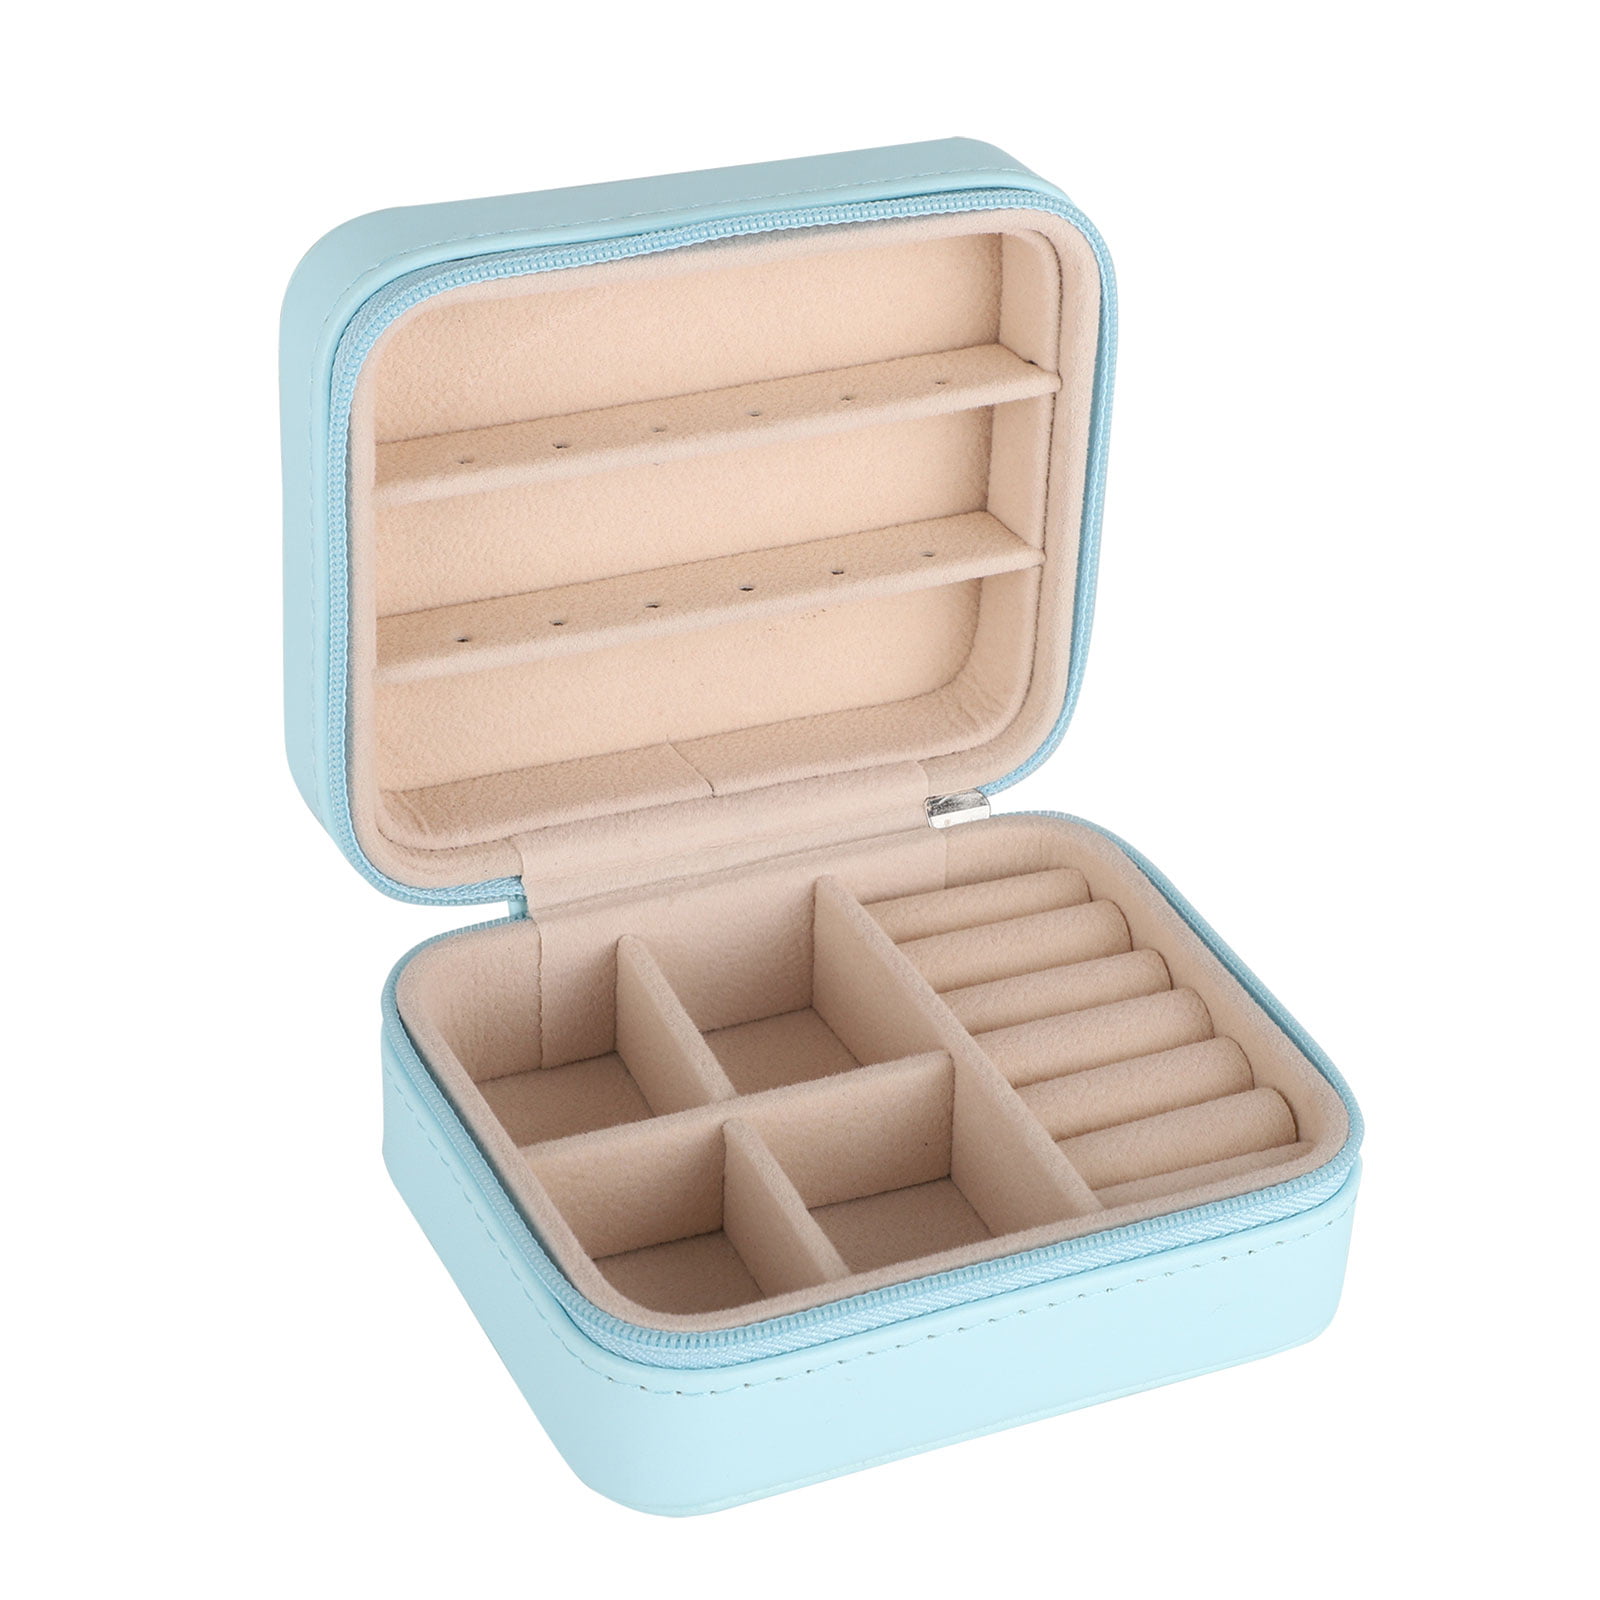 5 Pieces Portable Mini Pill Box Storage Case Jewelry Box Jewelry Organizer 